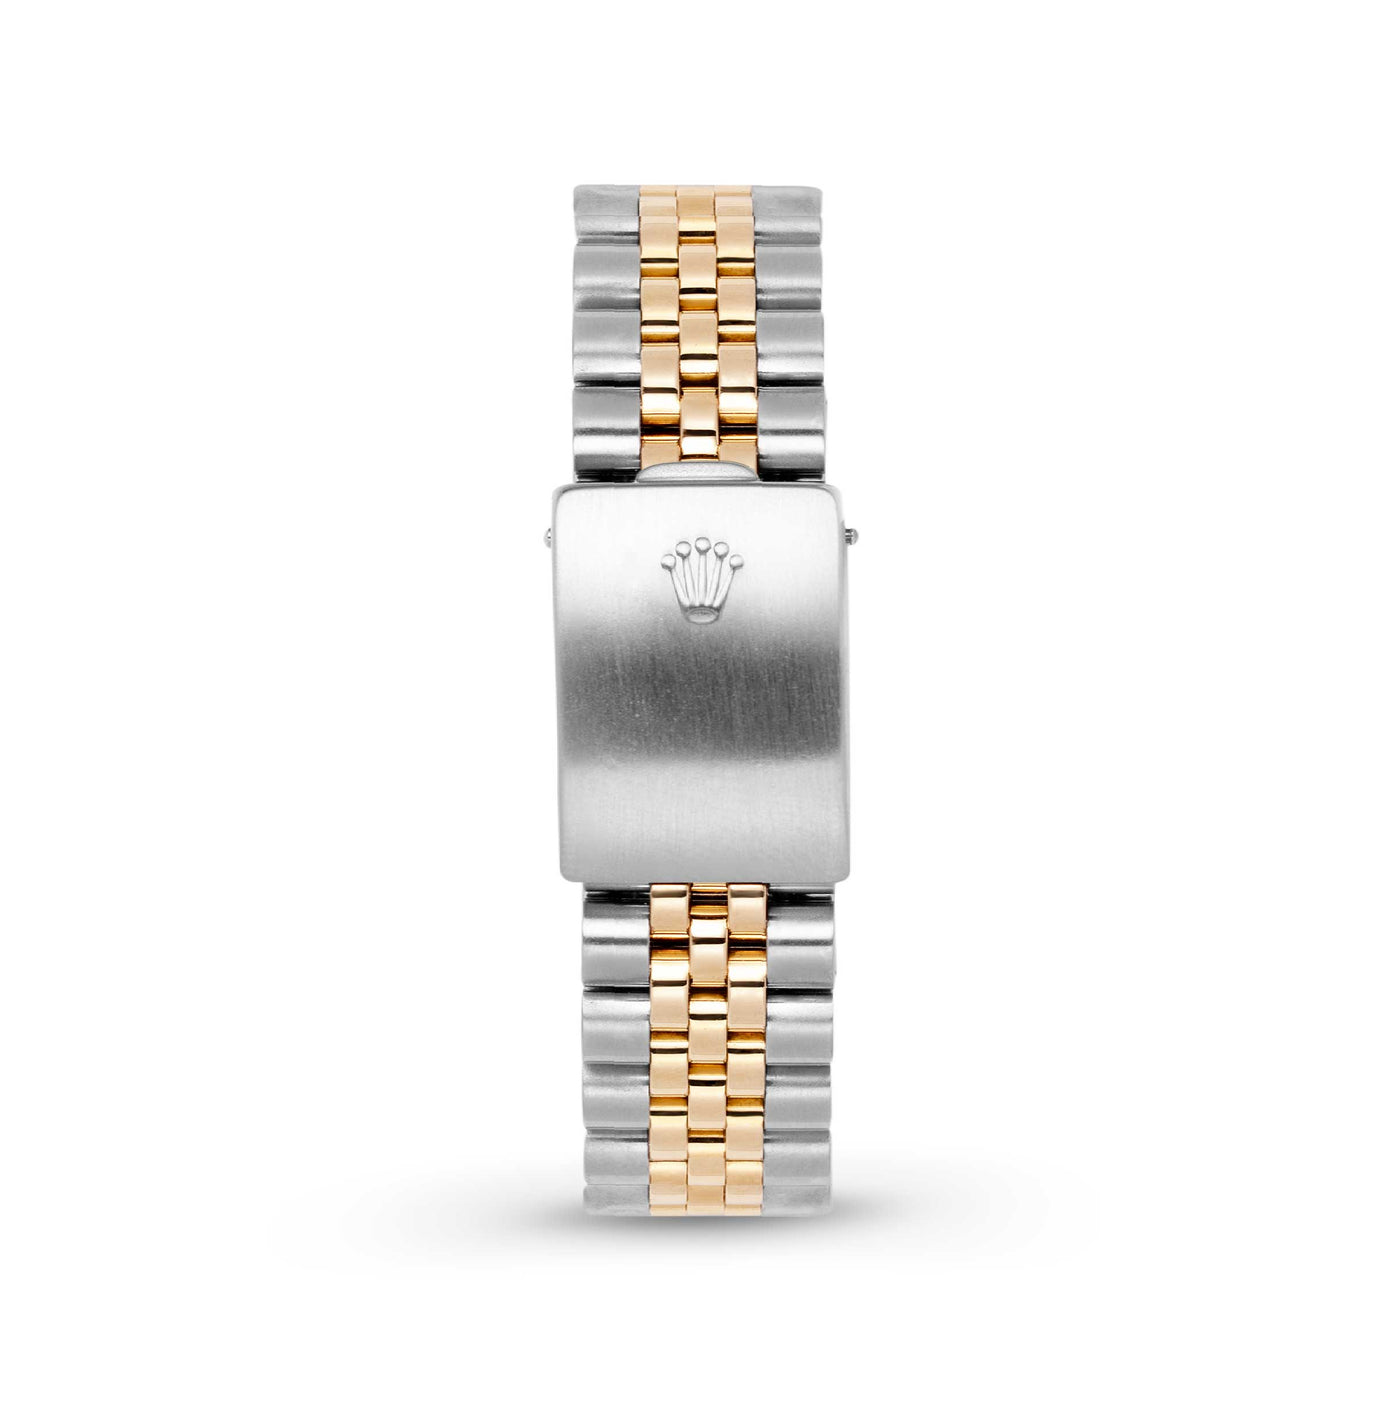 Rolex Datejust Diamond Bezel Watch 36mm Blue Roman Dial | 2.15ct